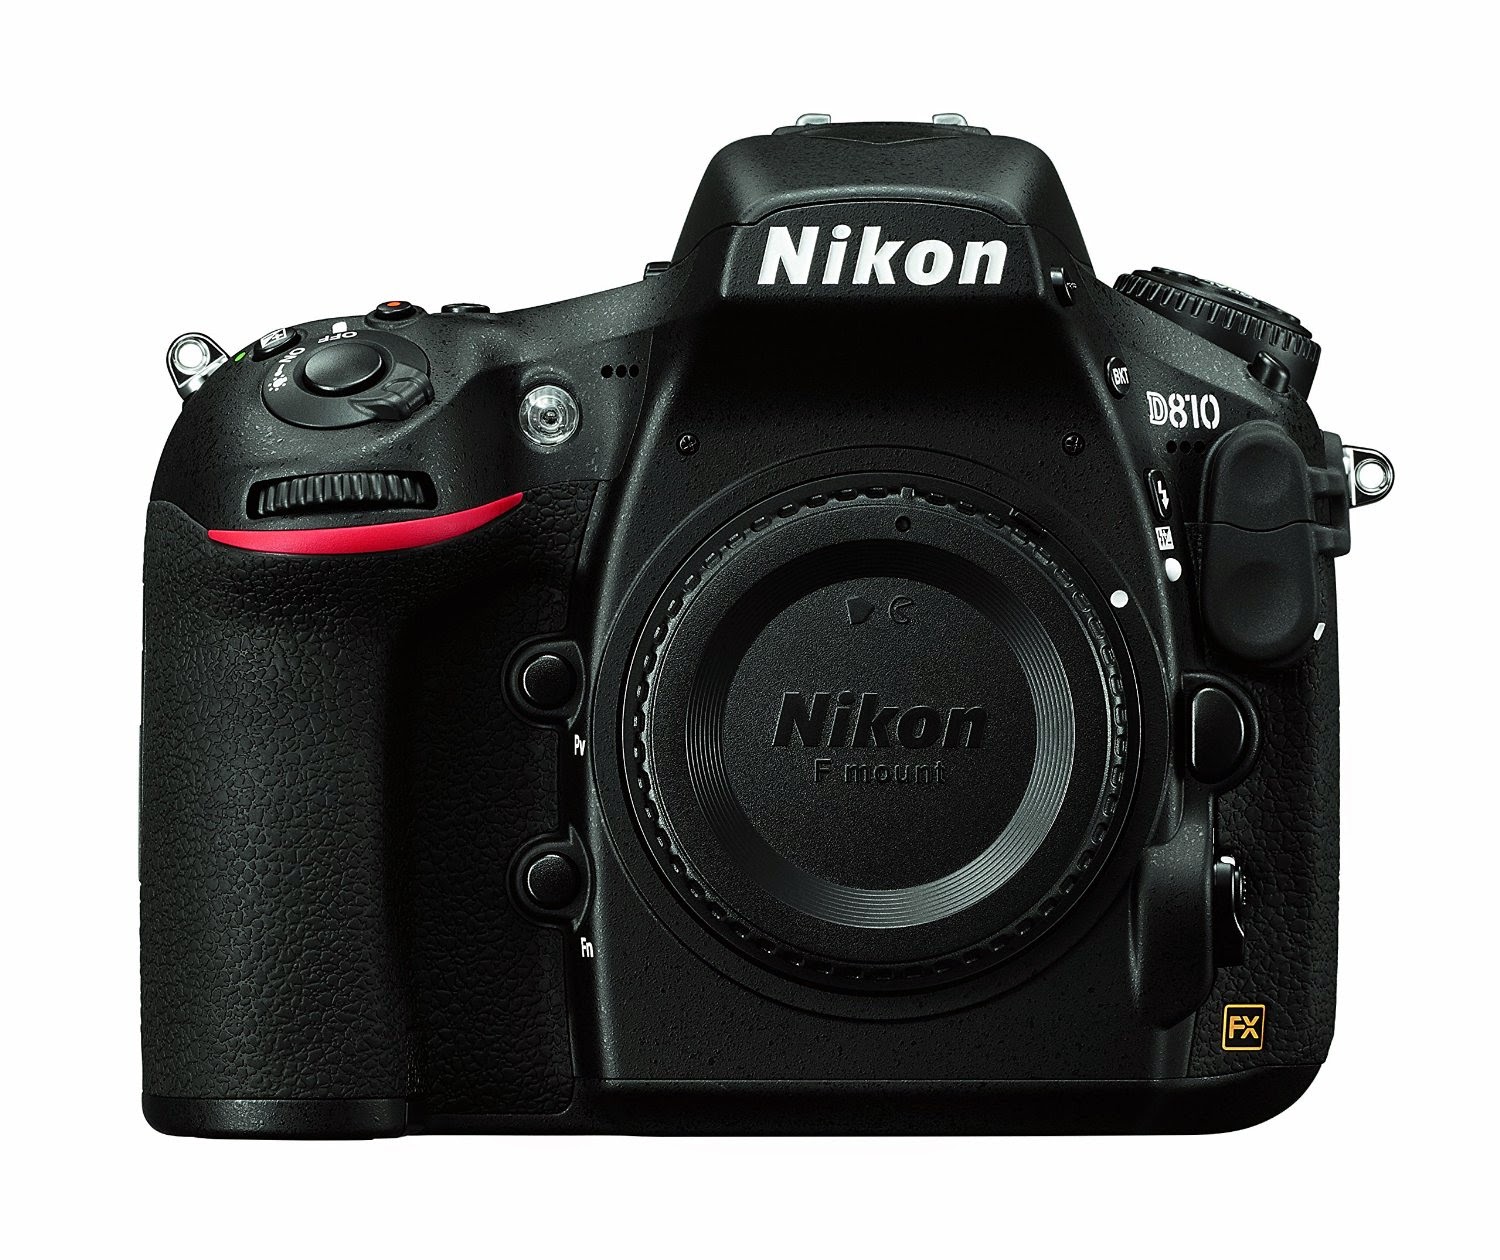 Nikon D810 FX-format Digital SLR Camera, review features plus compare Nikon D810 vs D800 vs D800E, 36.3 megapixel, EXPEED 4 image processing, wide ISO range, full HD 1080p videos, new RAW small size option